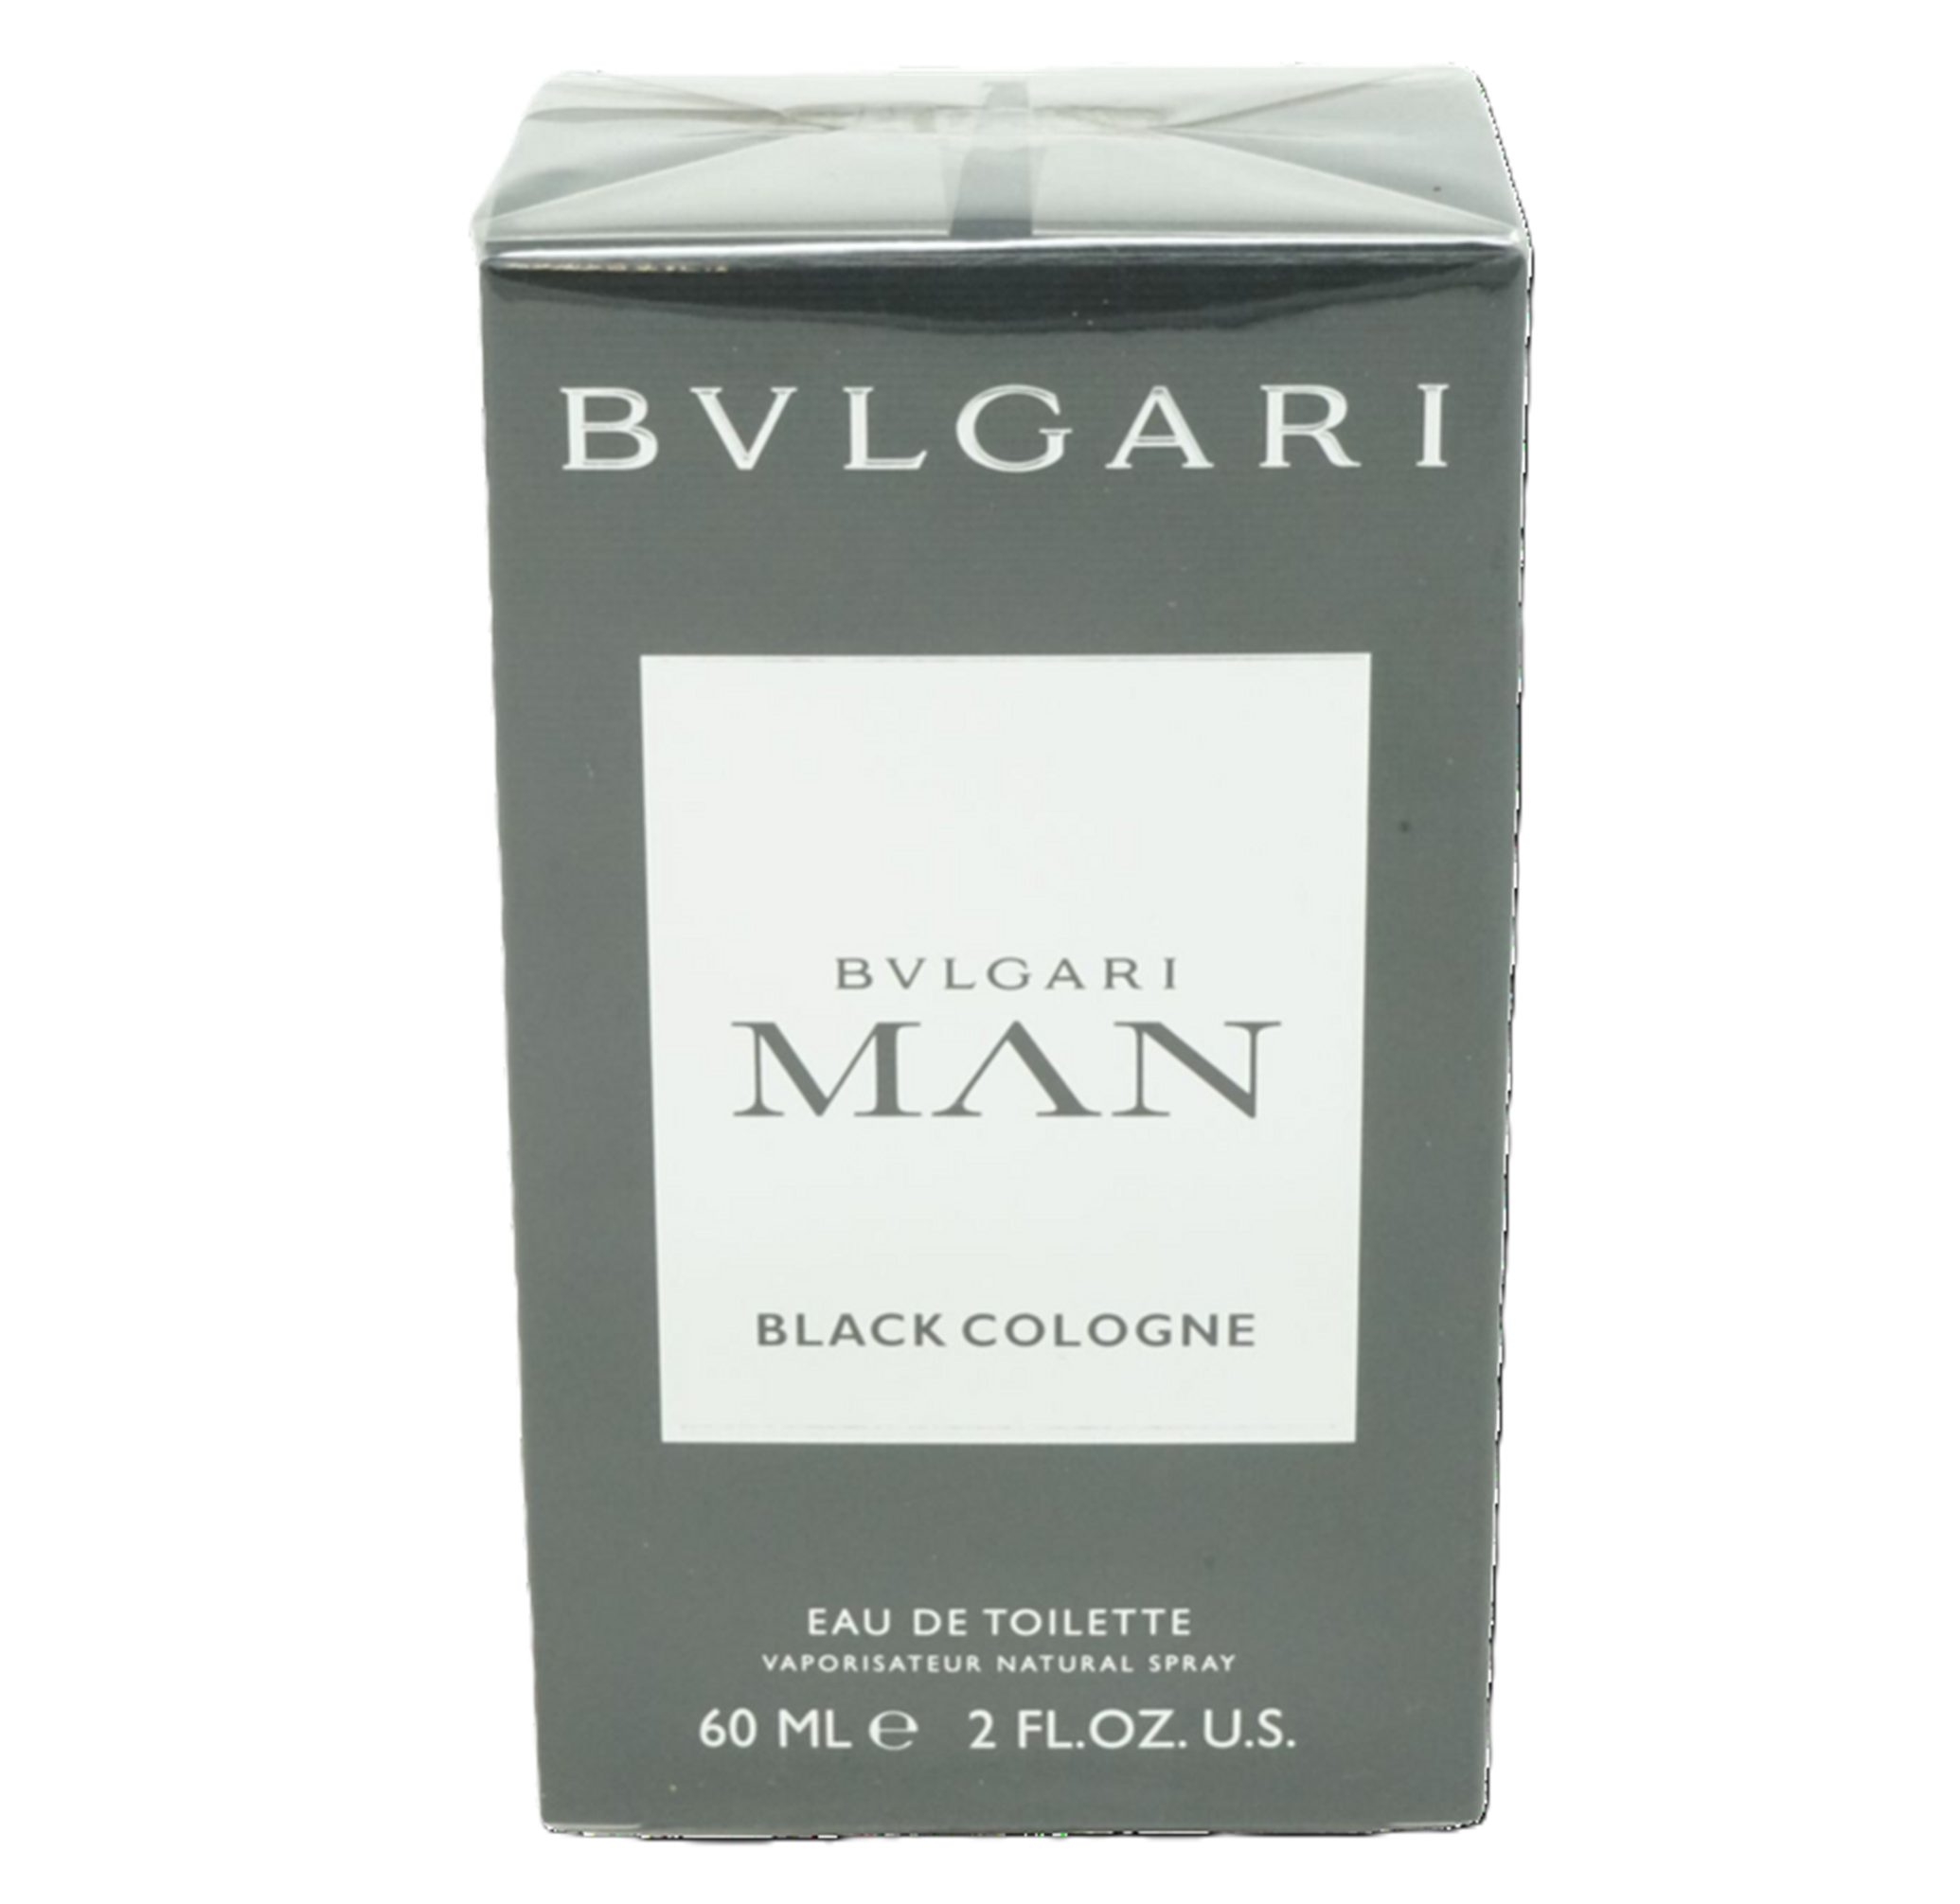 BVLGARI Eau de Toilette Bvlgari Man Black Cologne Spray 60ml